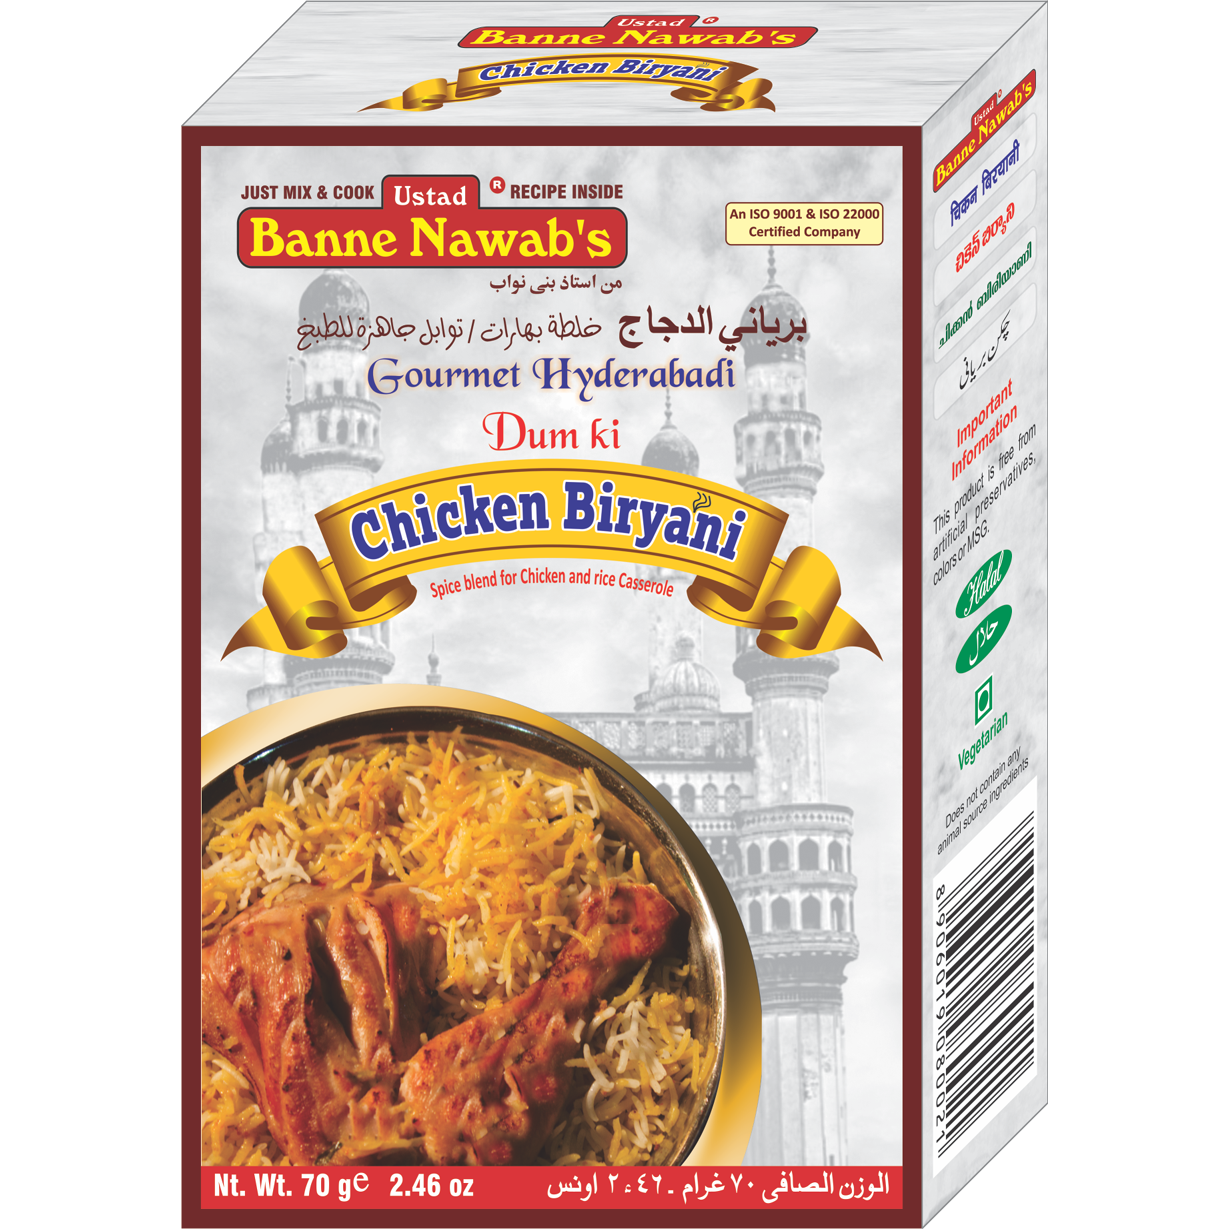 Ustad Banne Nawab's Chicken Biryani Masala - 2.46 Oz (70 Gm)